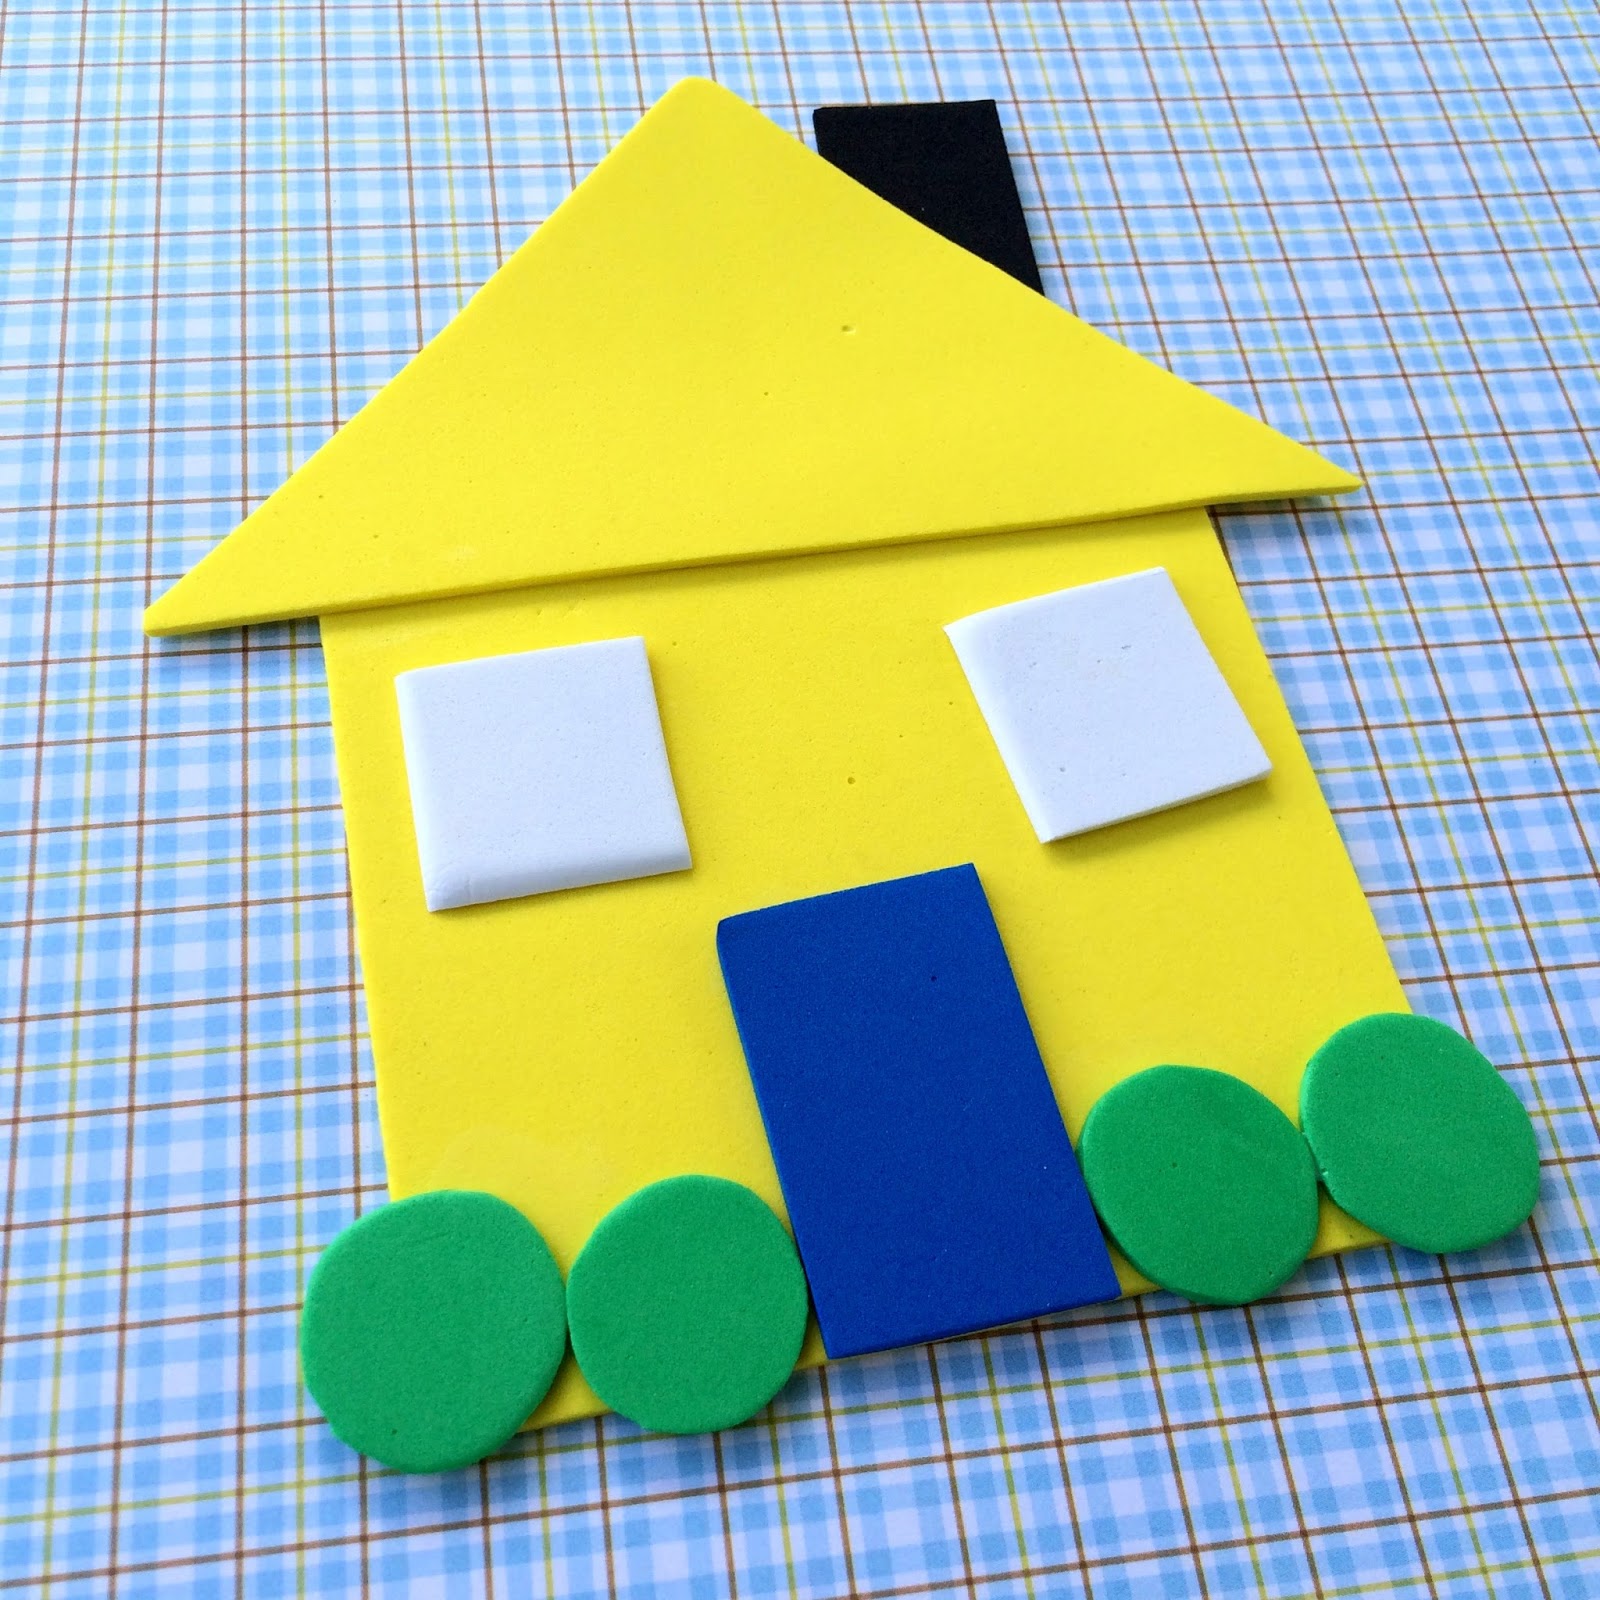 Little Family Fun: Shape House - Educational Craft